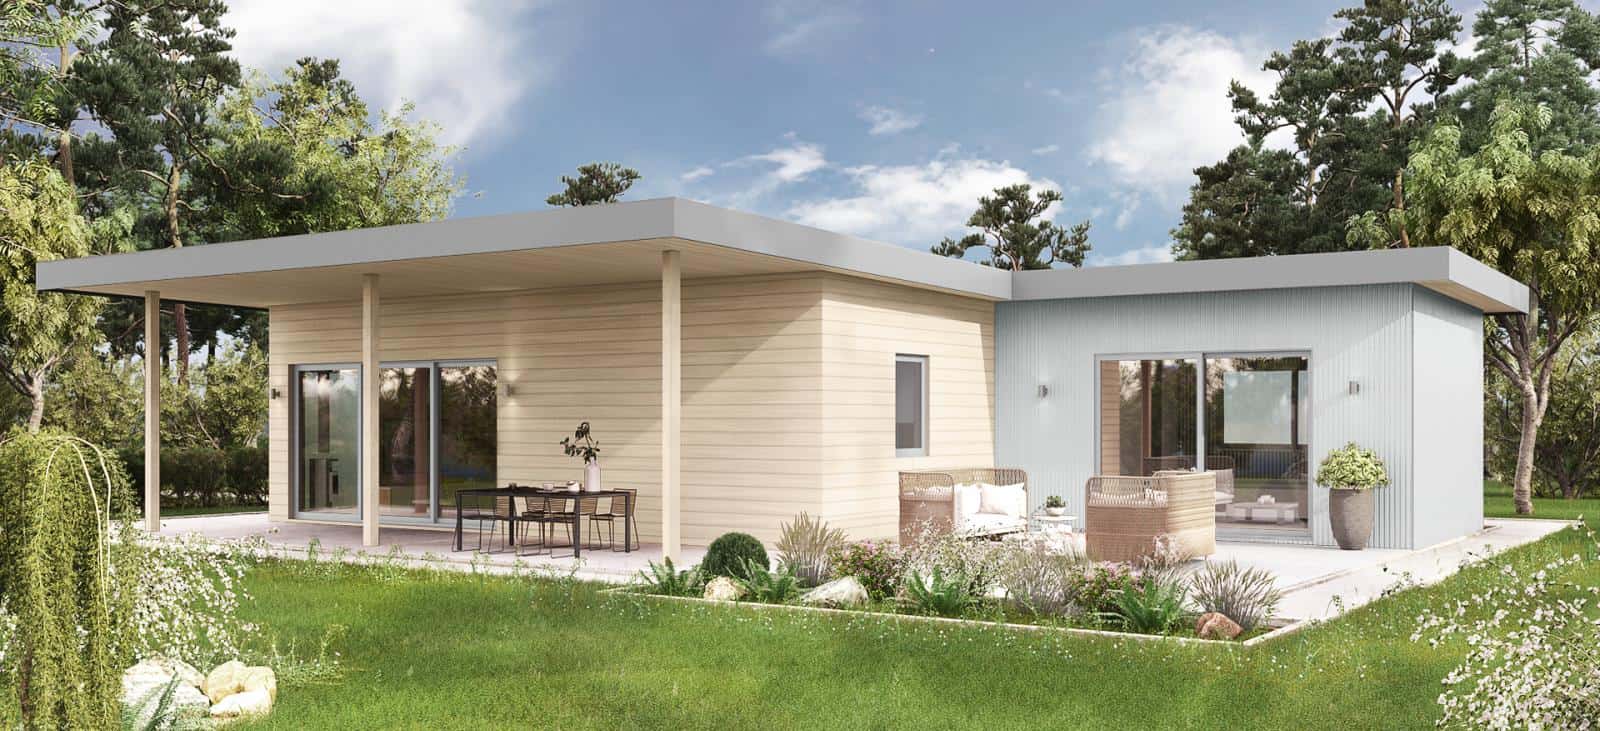 Tenaya Modern Cottage prefab home or ADU by Dvele - rear exterior showing large covered deck and bedroom deck.